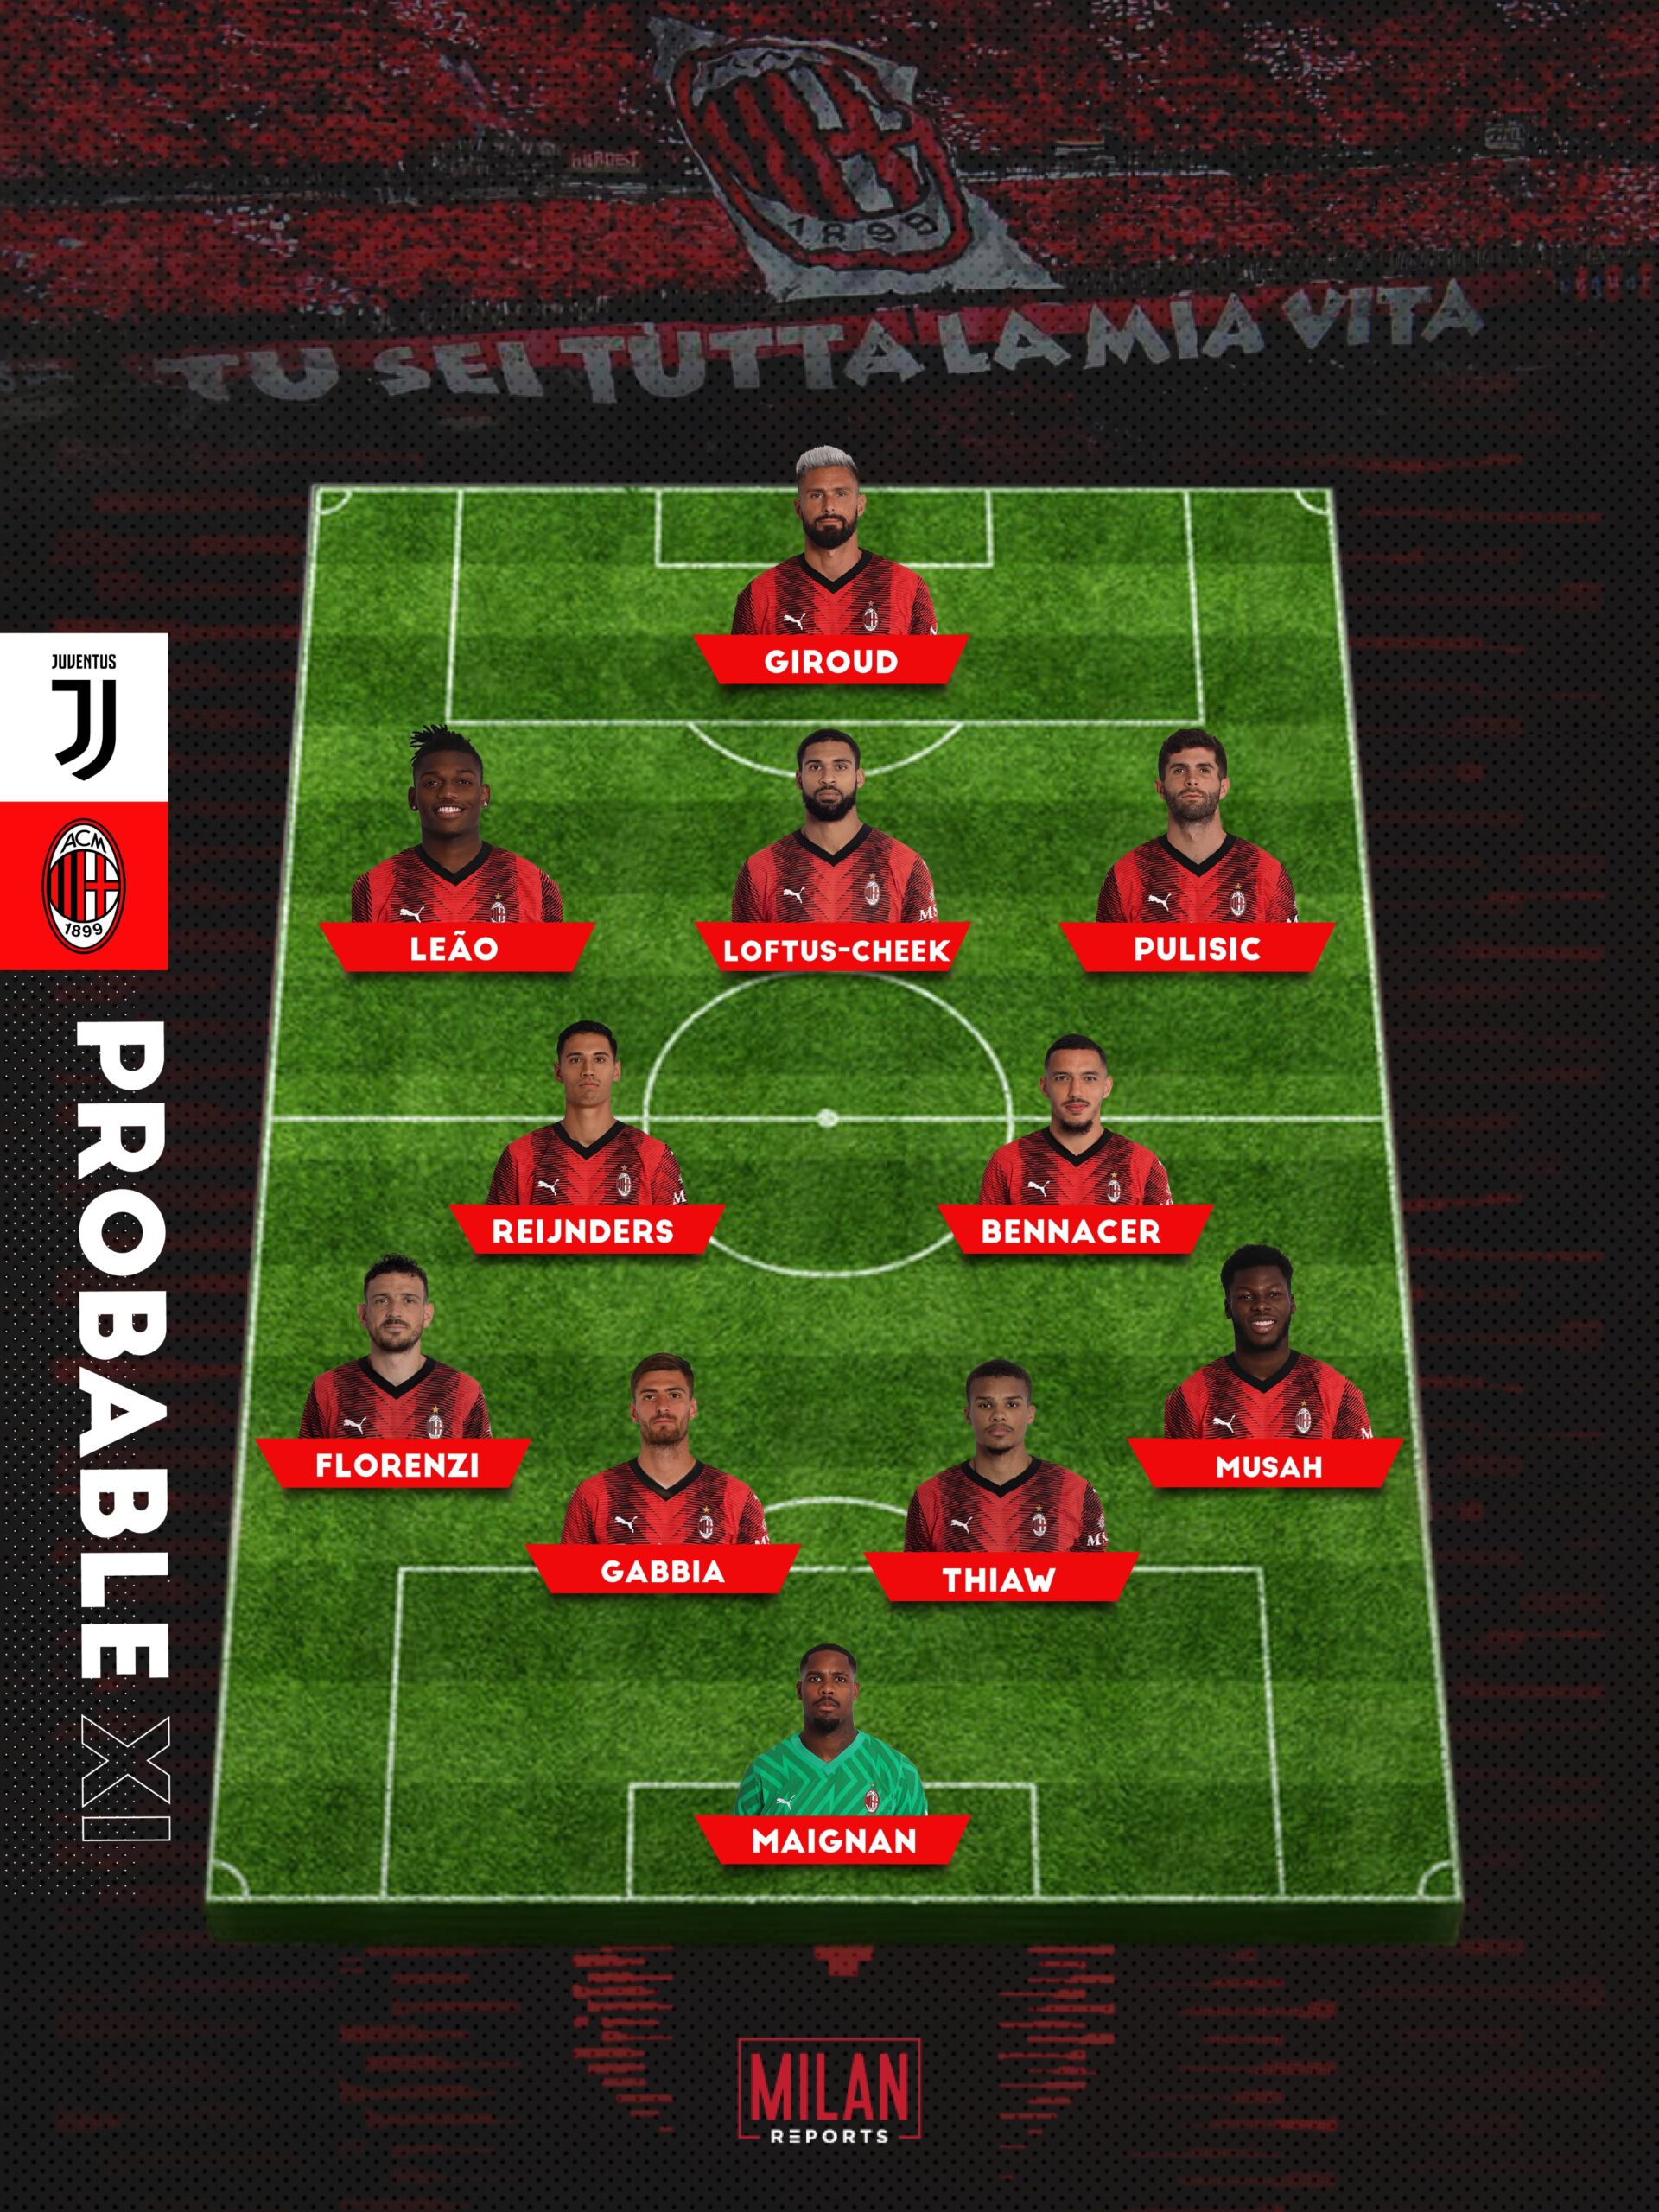 AC Milan probable lineup vs Juventus (Milanreports.com)